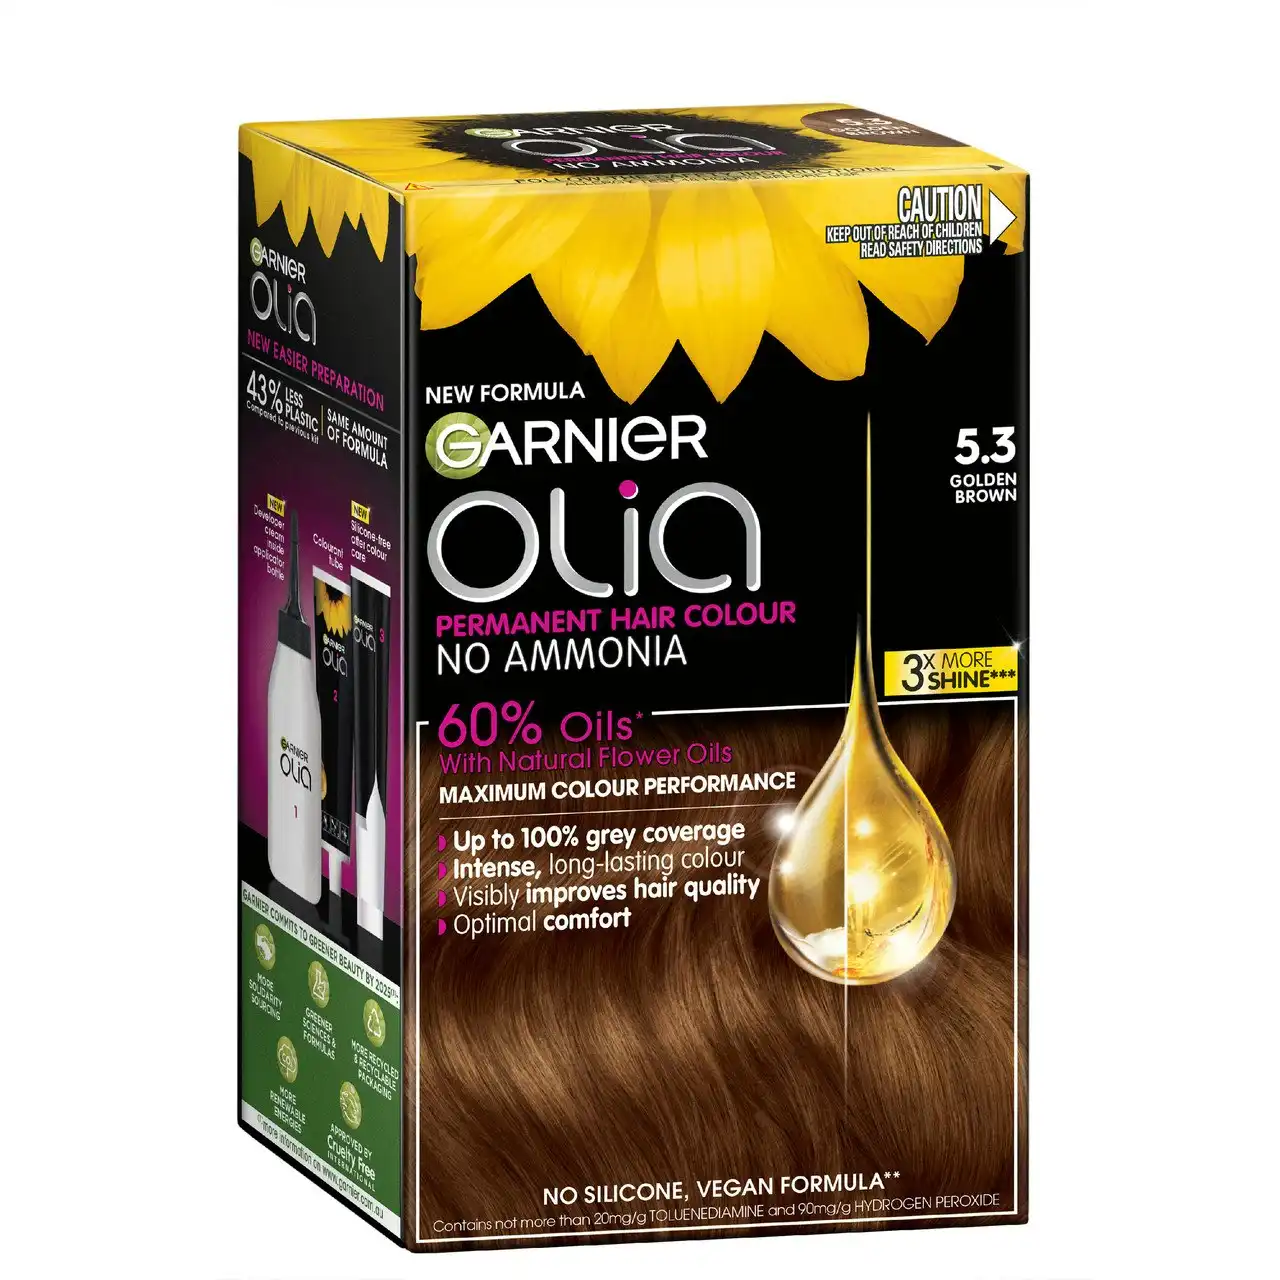 Garnier Olia 5.3  Golden Brown Permanent Hair Colour No Ammonia, 60% Oils